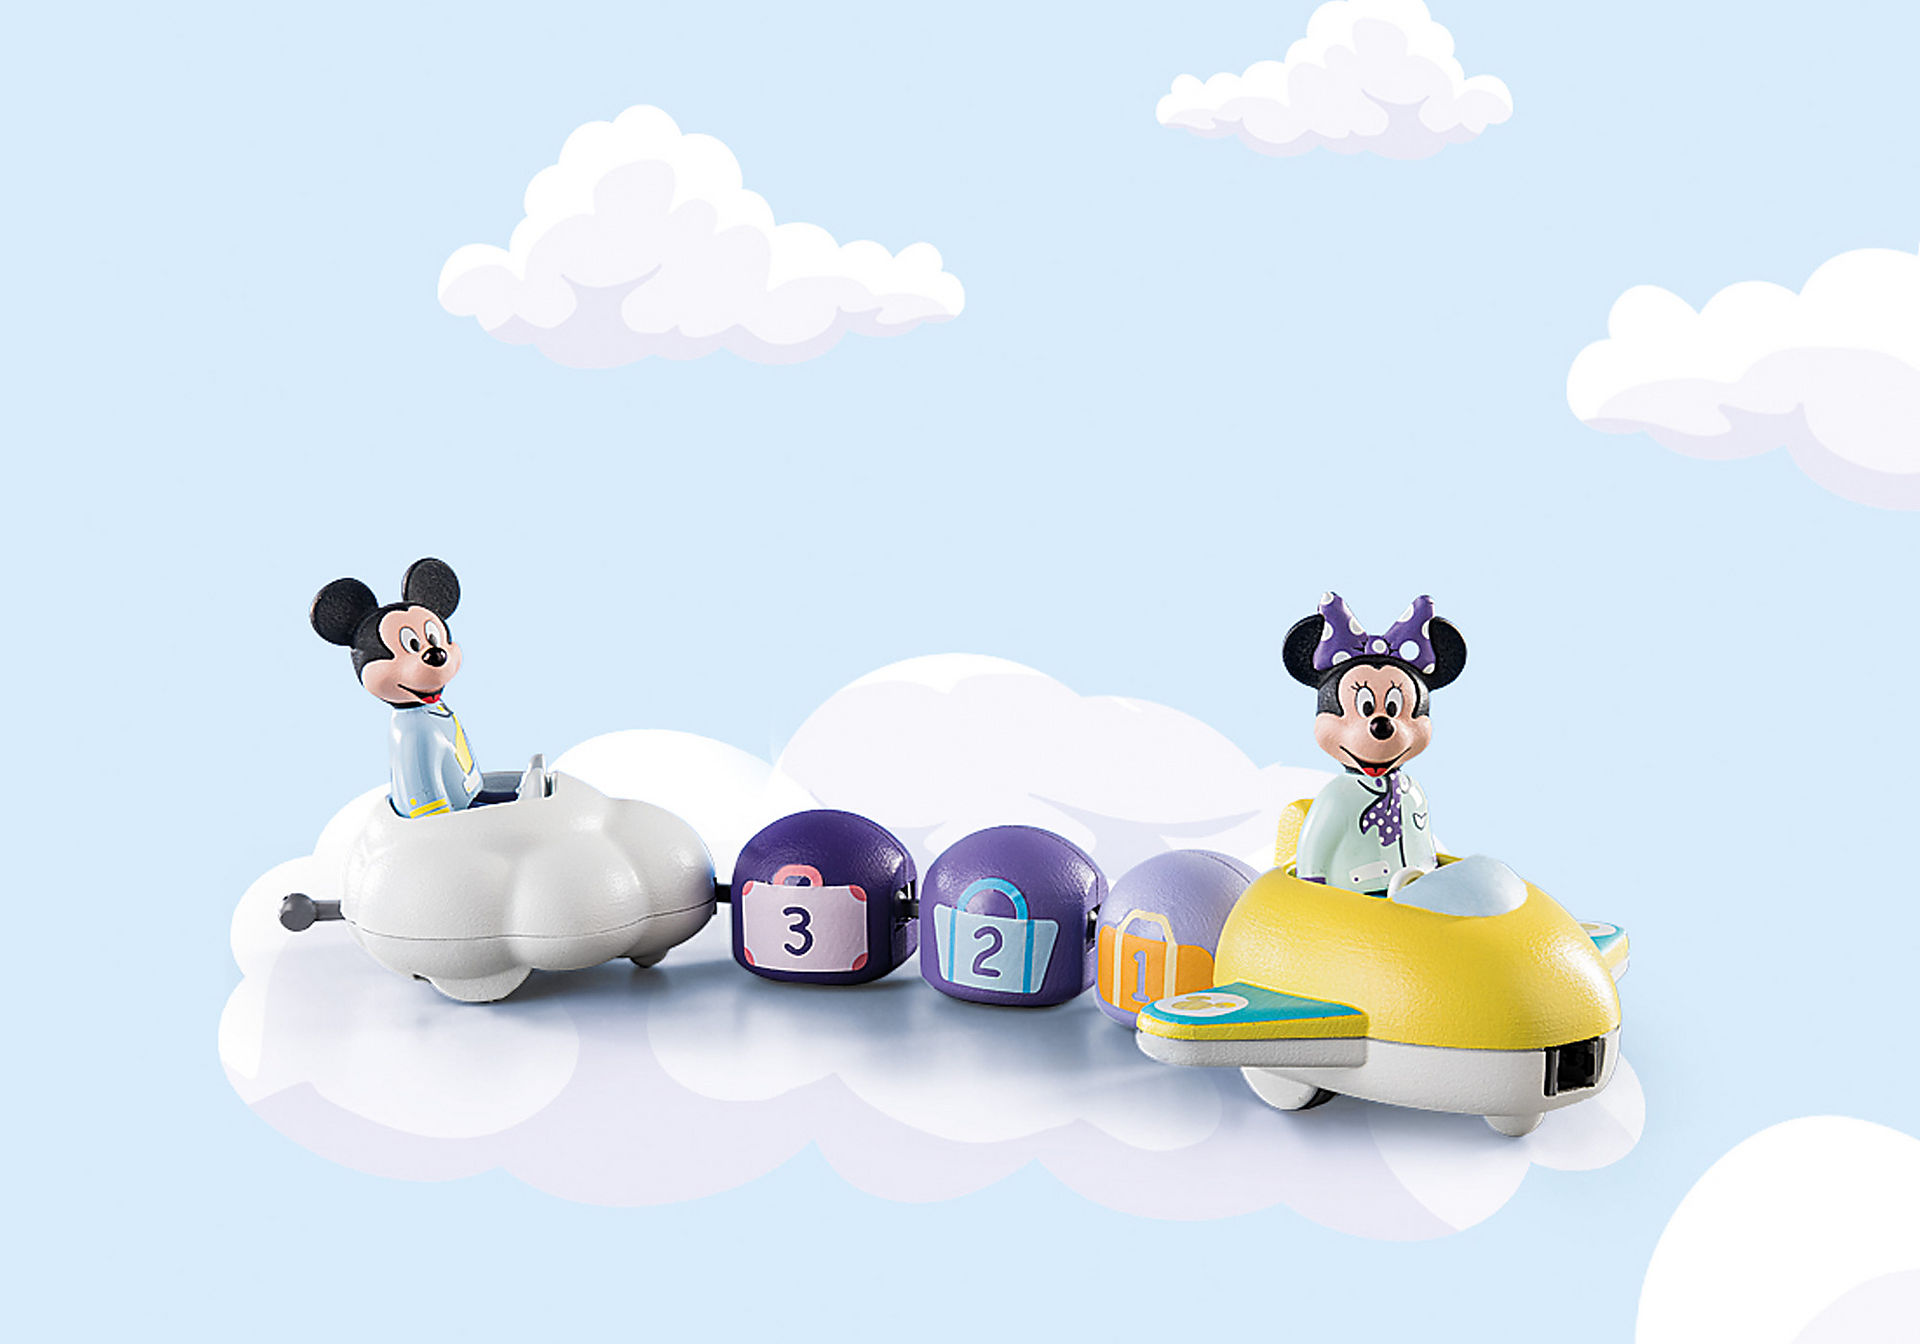 71320 1.2.3 & Disney: Mickey's & Minnie's Cloud Ride zoom image5